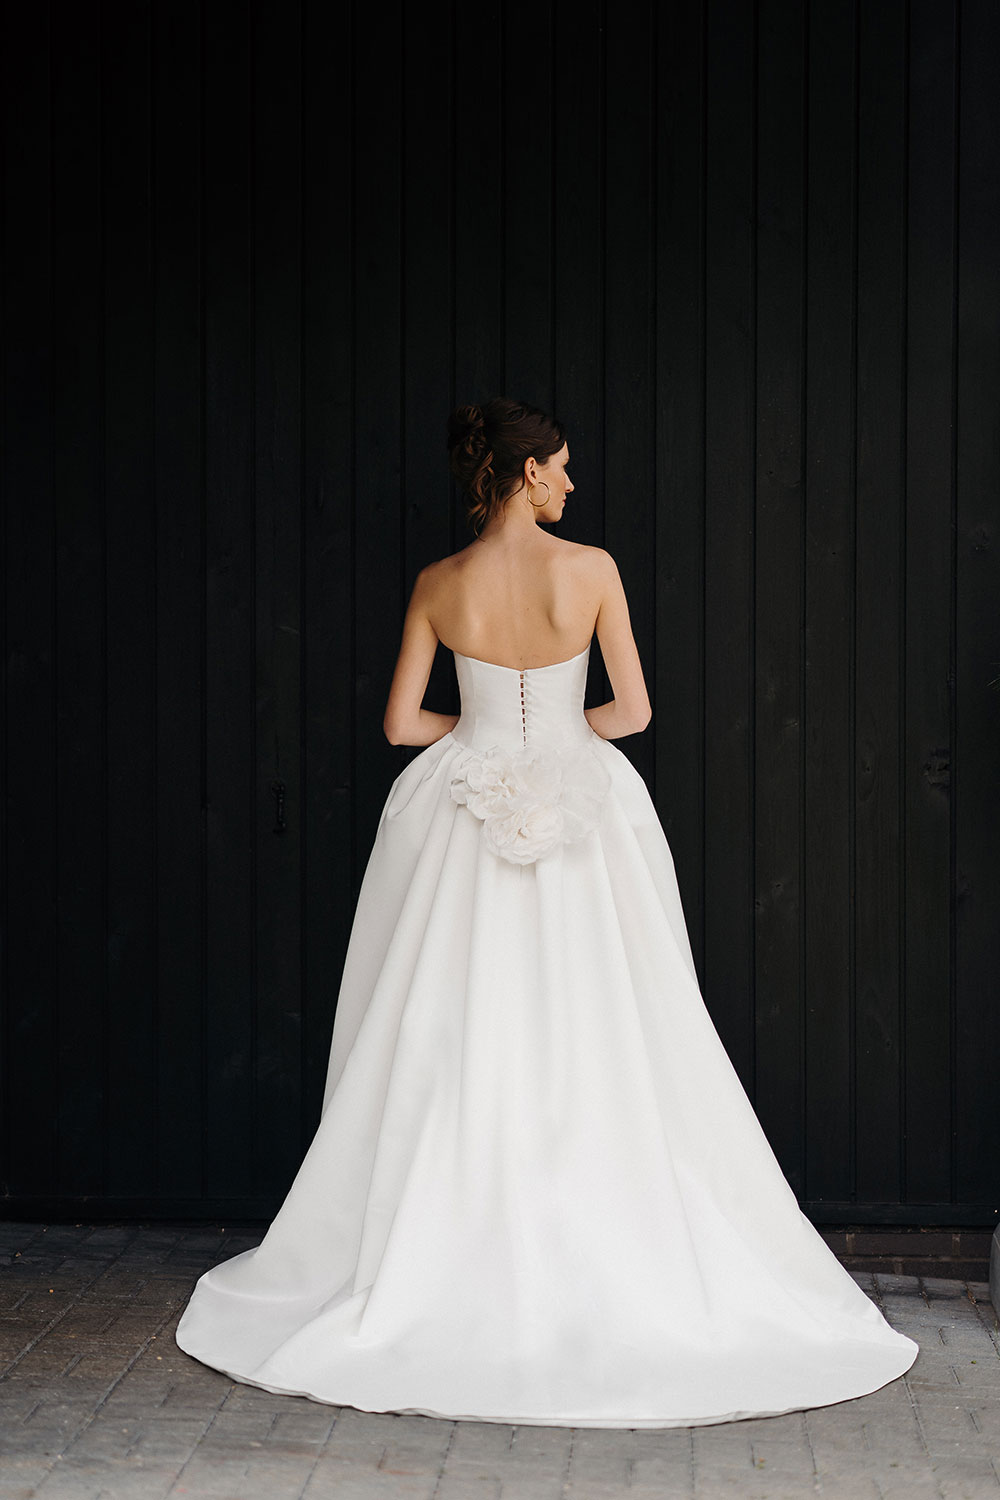 Schiffer wedding dress by Nortier 